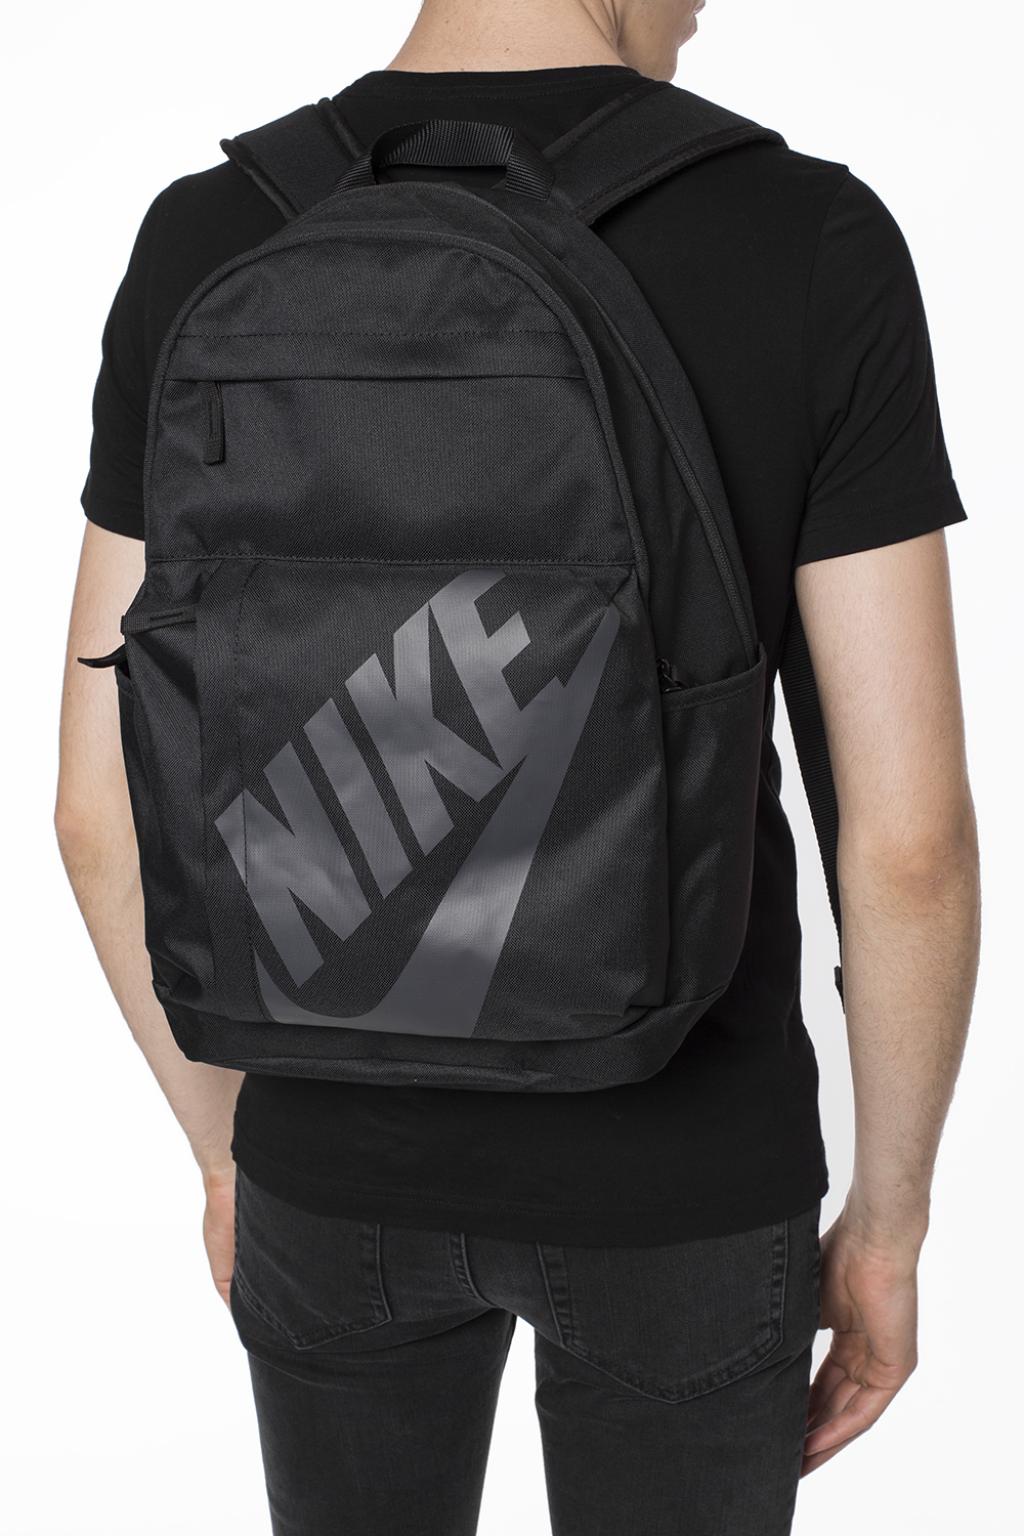 Nike Logo-printed backpack | Bags |